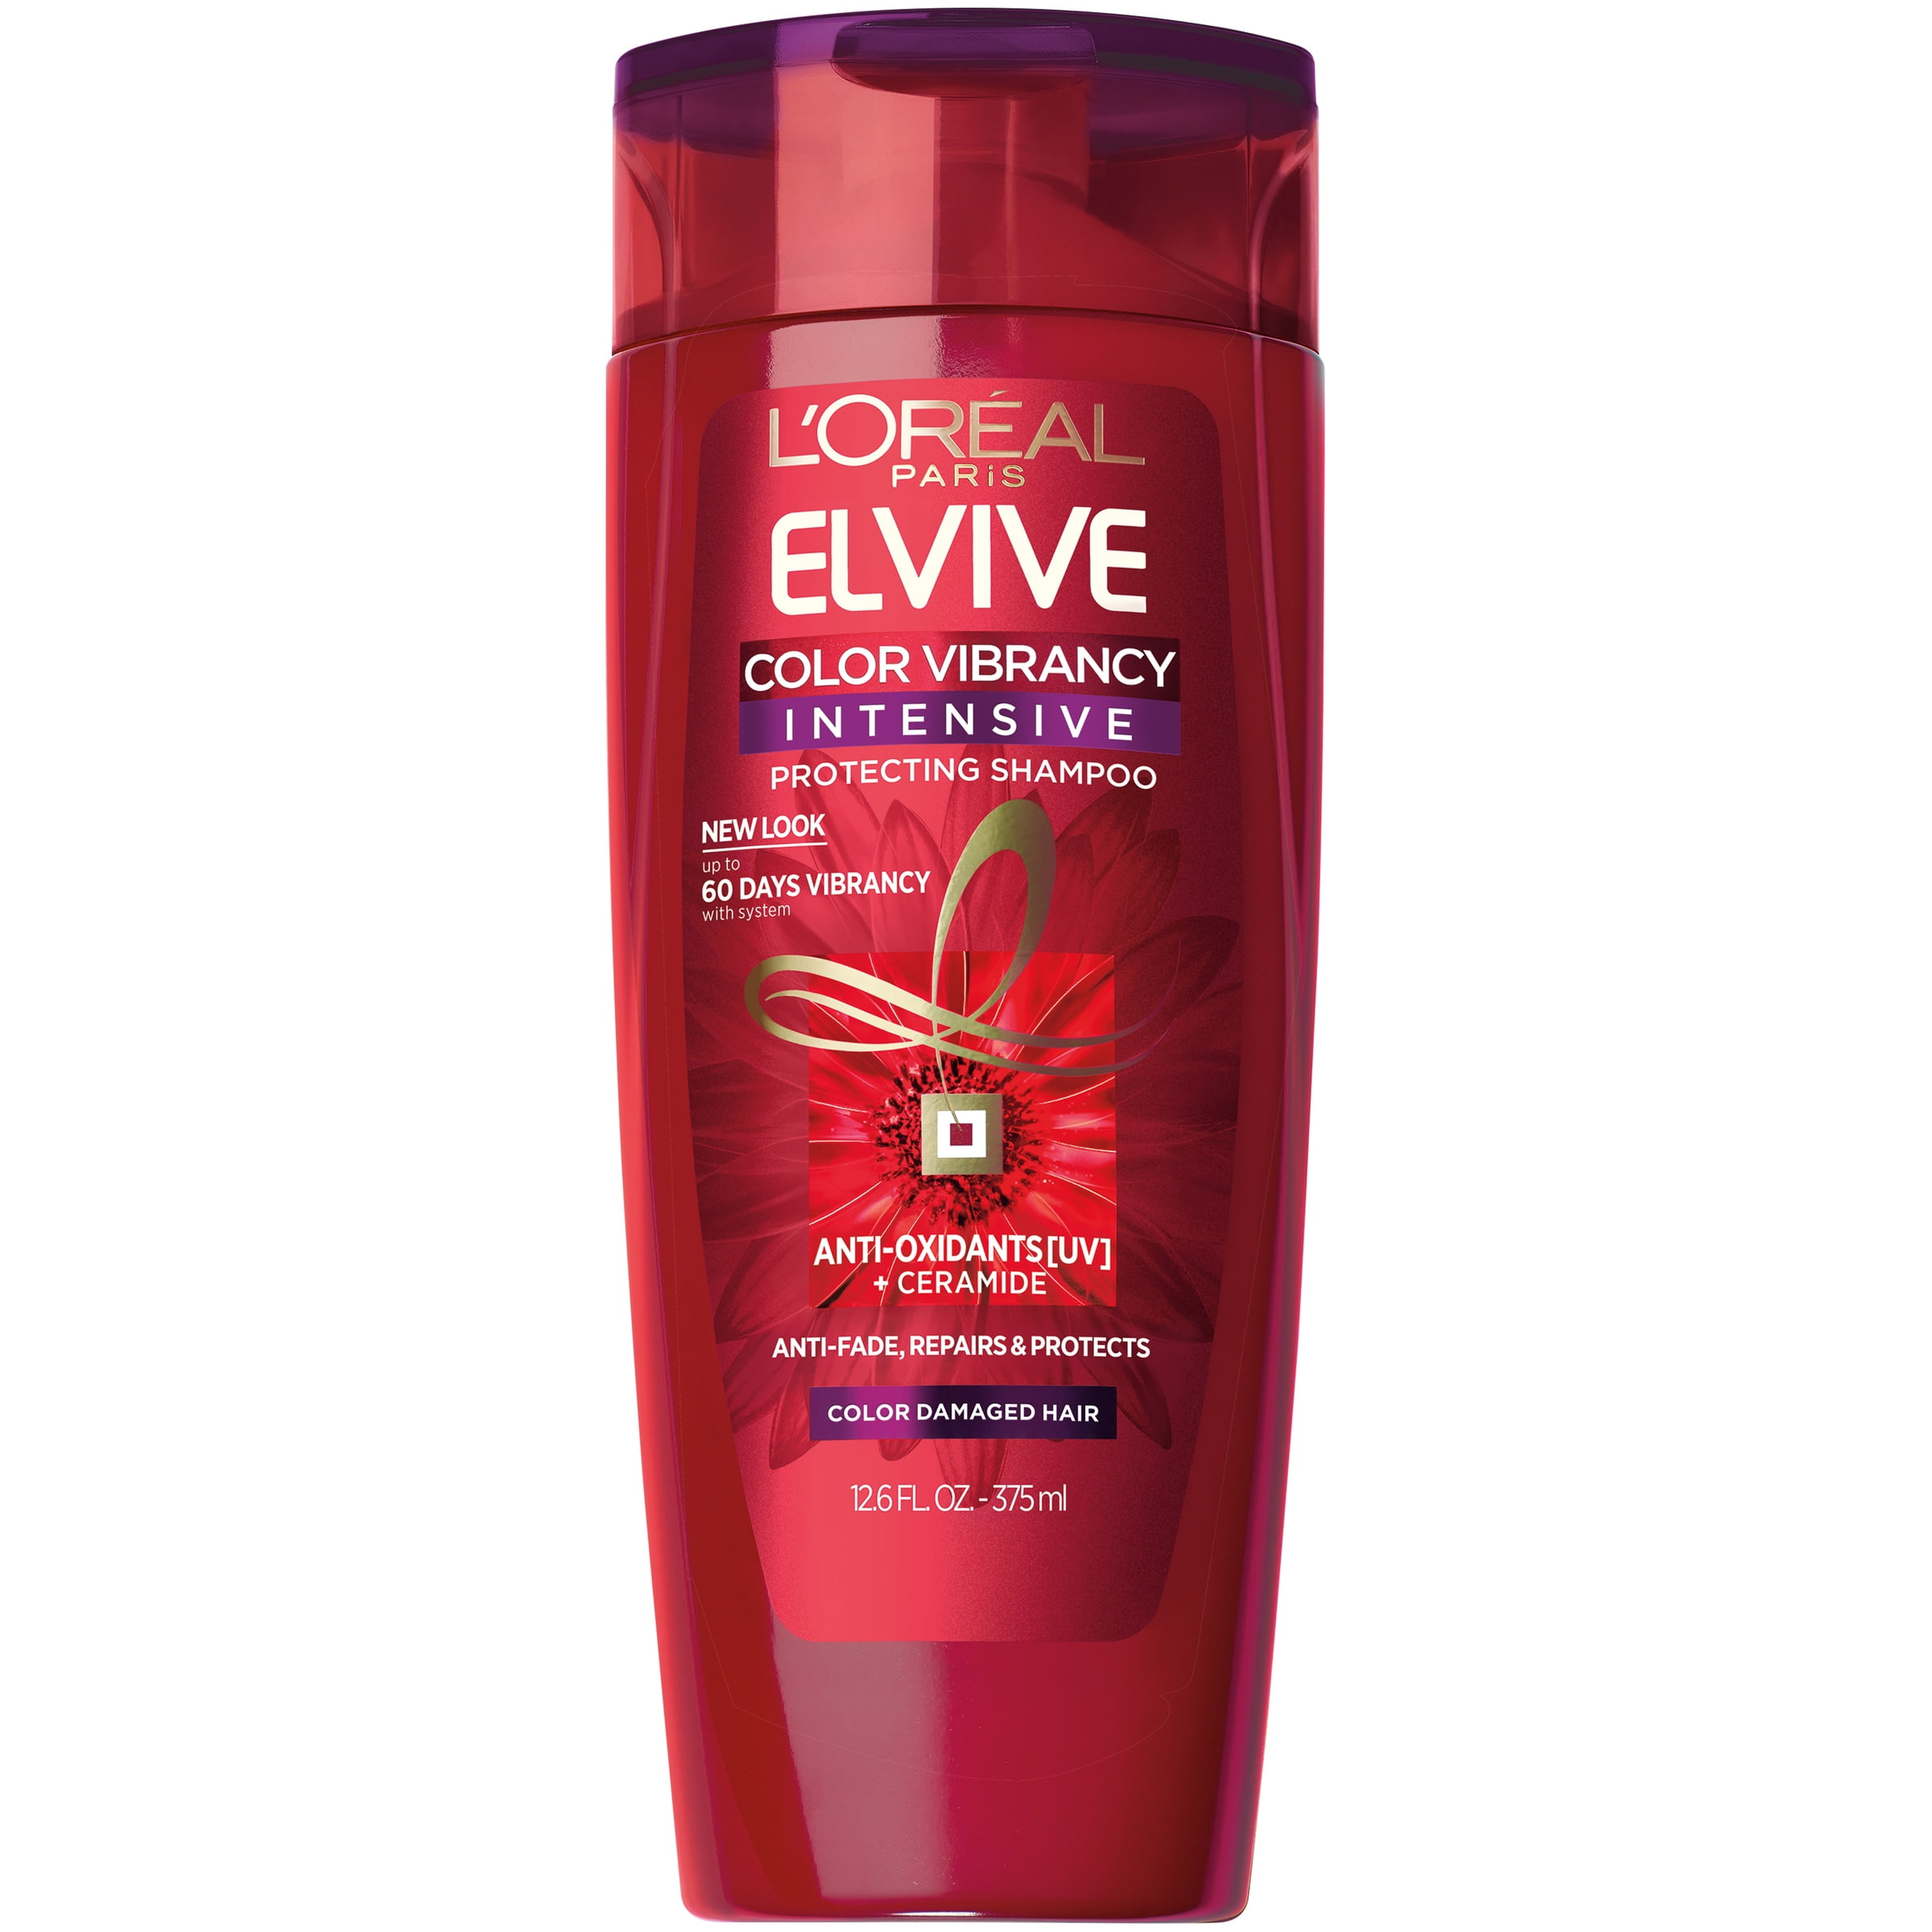 Paris Elvive Color Vibrancy Intensive Protecting Shampoo, 12.6 fl. oz. - Walmart.com